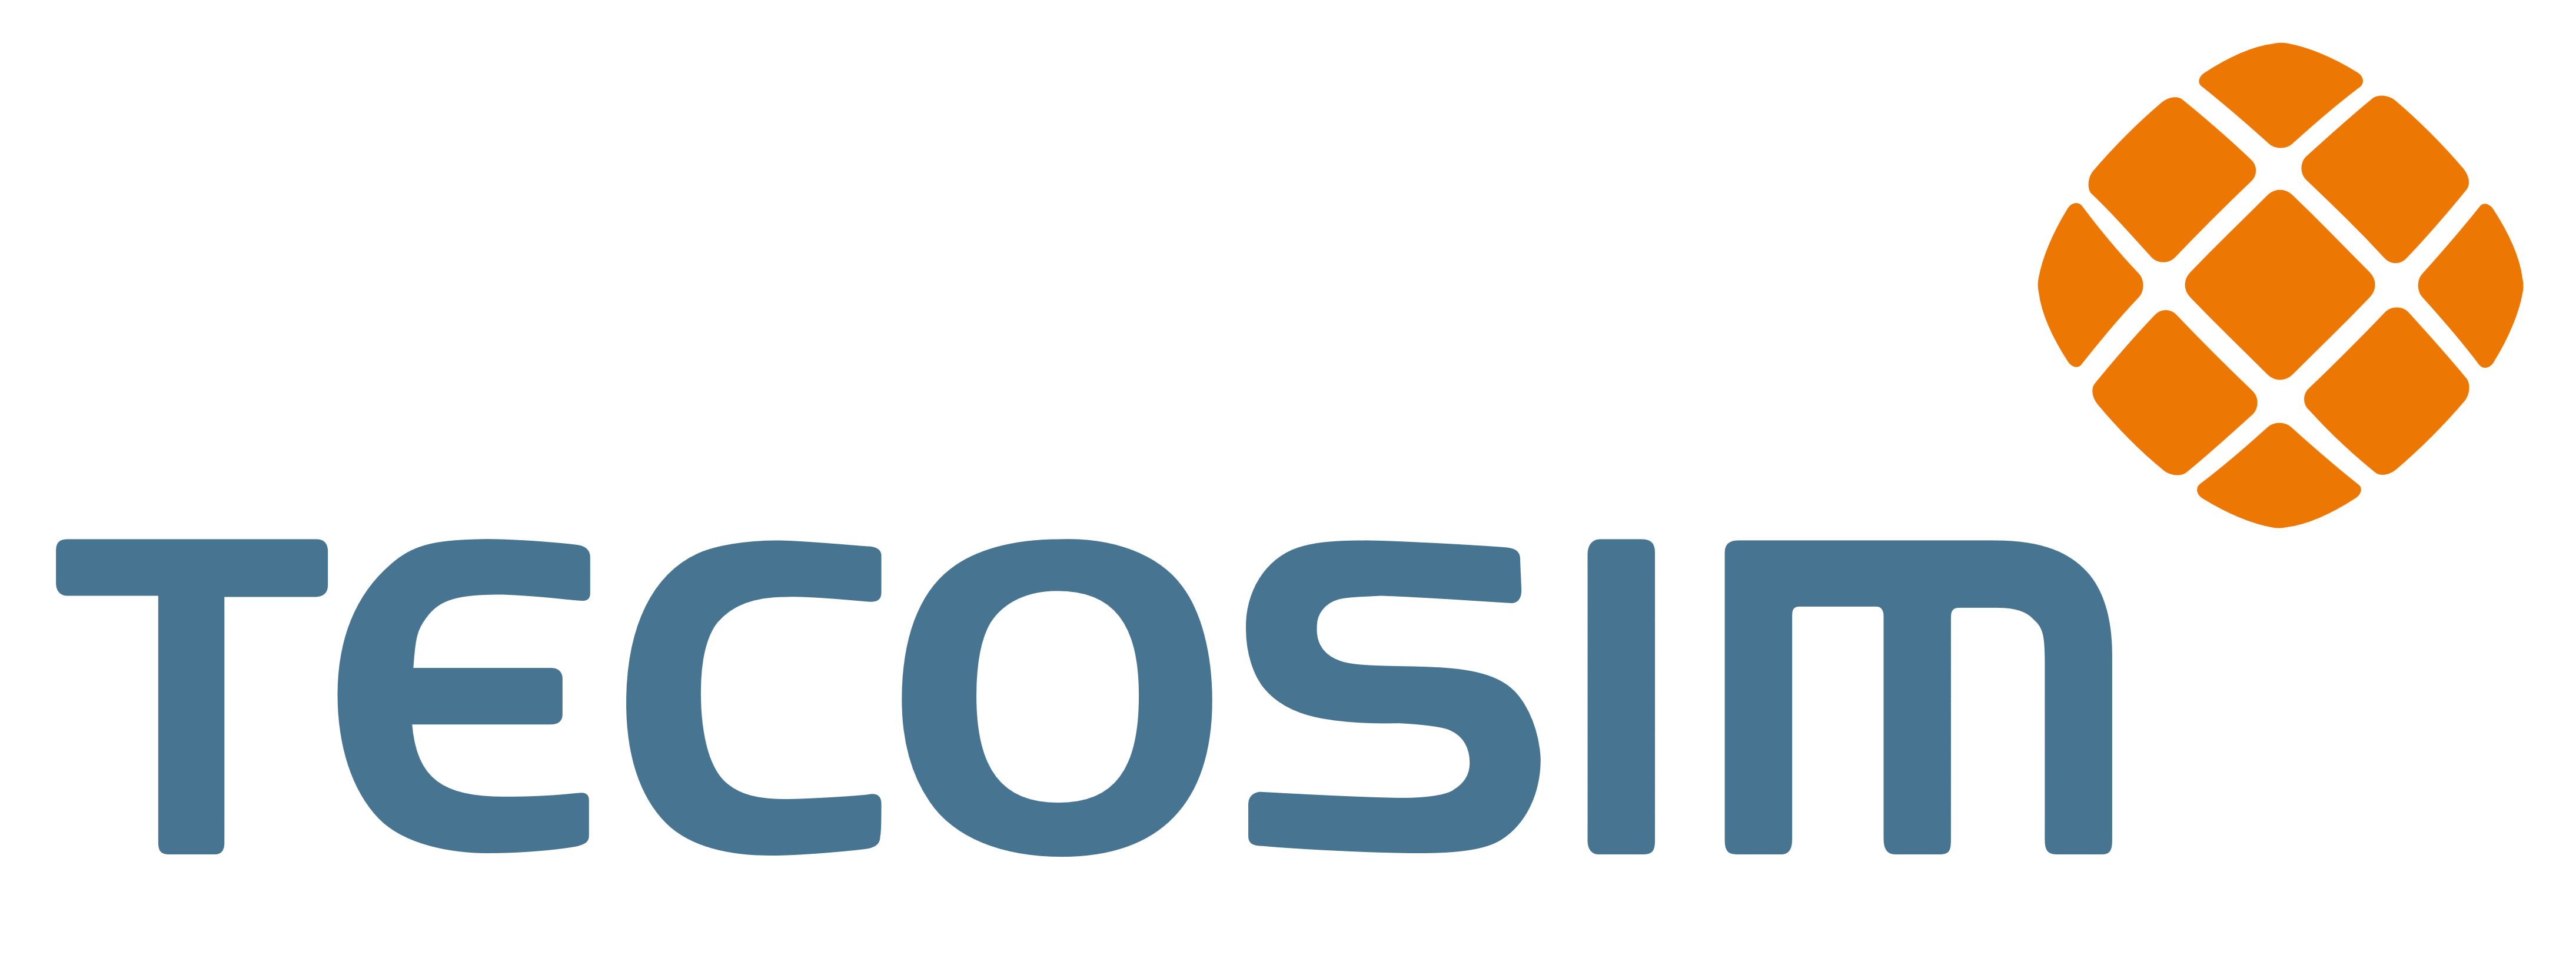 Medical Technology Logo - TECOSIM Medical technology – Logos Download